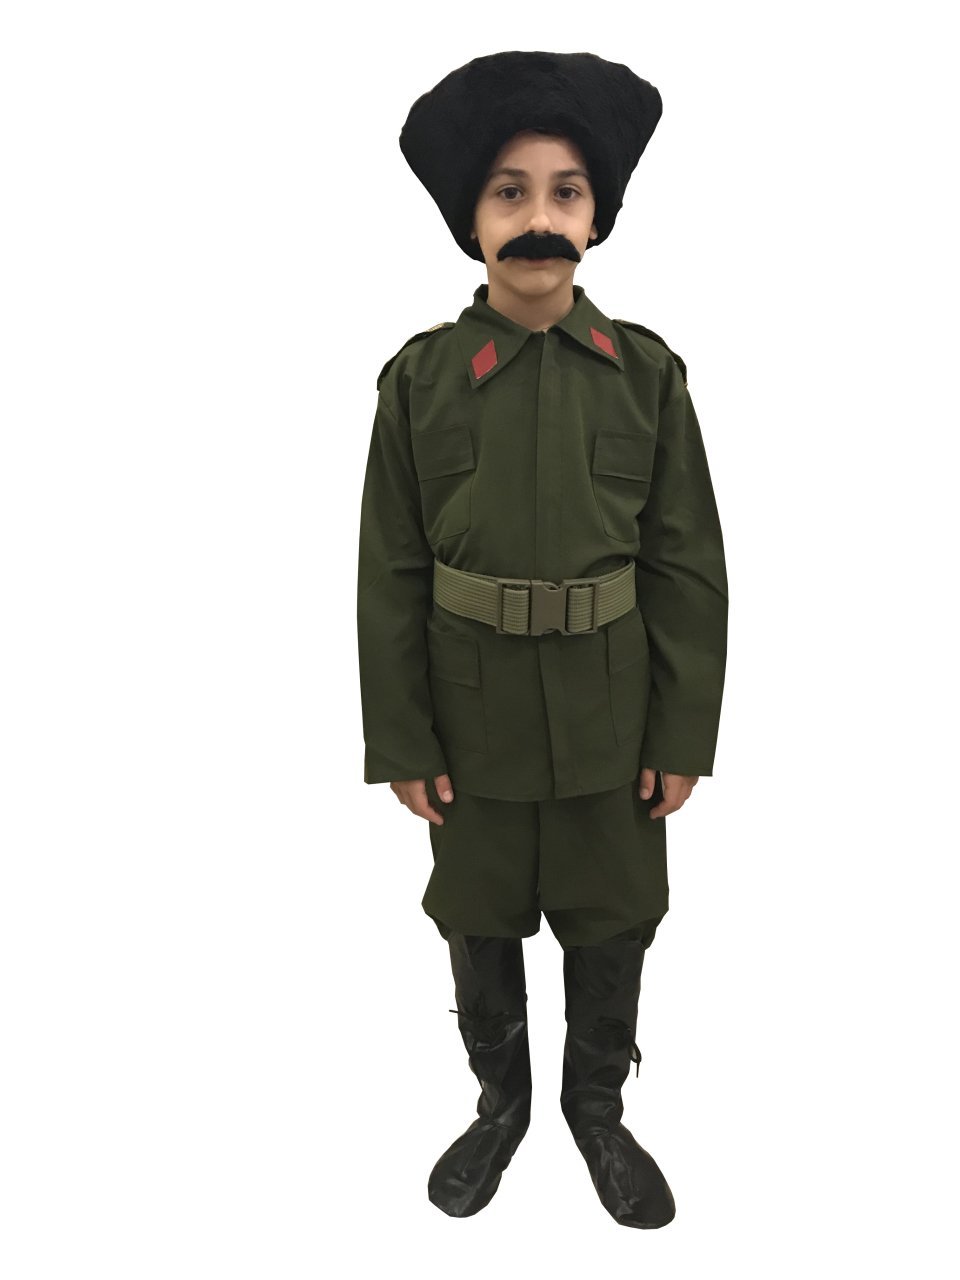 Atatürk Kıyafeti